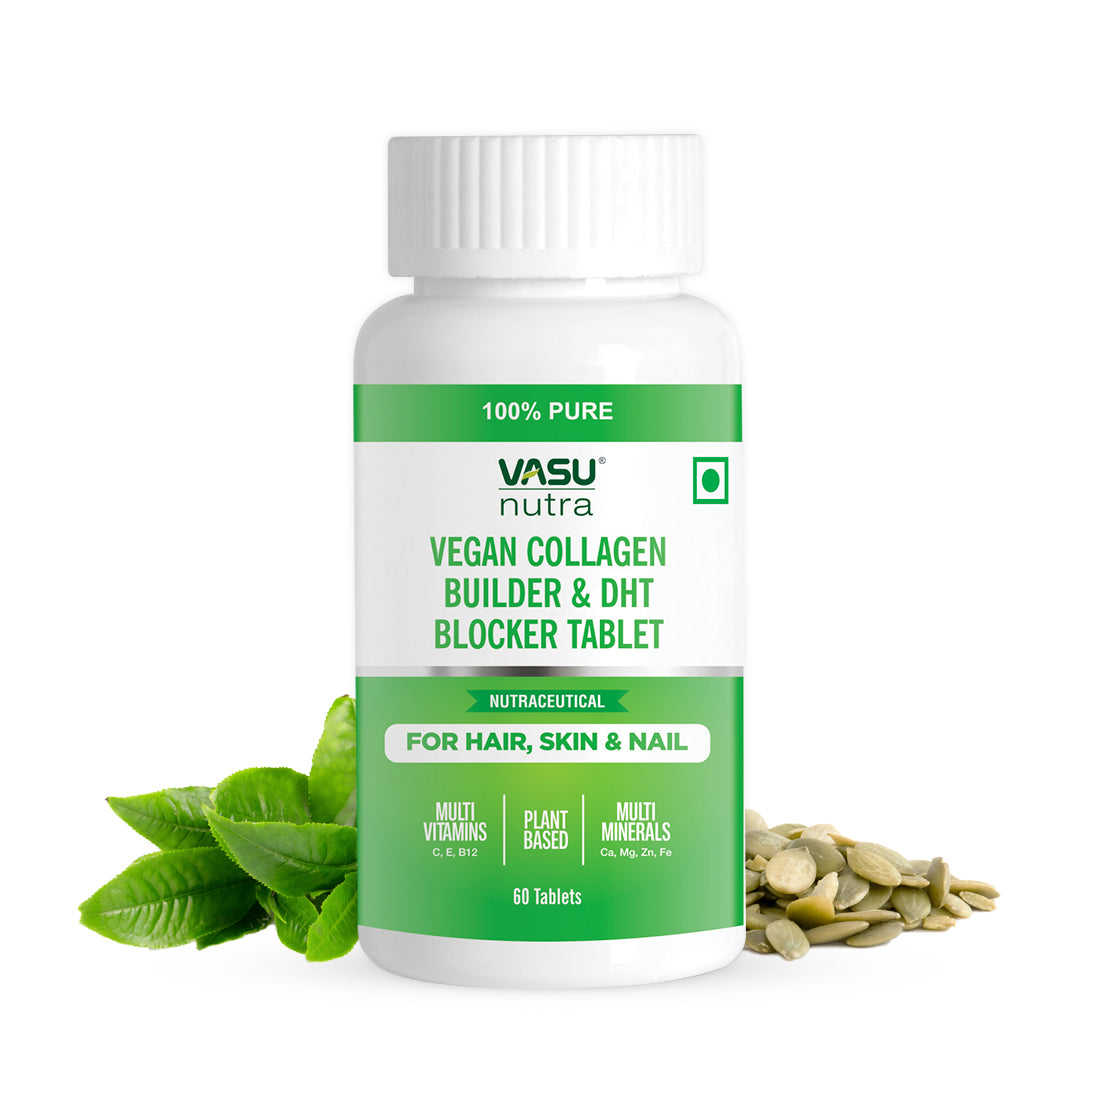 Vasu Nutra Vegan Collagen Builder & DHT Blocker Tablet - Nutraceutical Supplement for Hair, Skin & Nail - Multi Vitamins | Plant Based | Multi Minerals - 60 Tablets